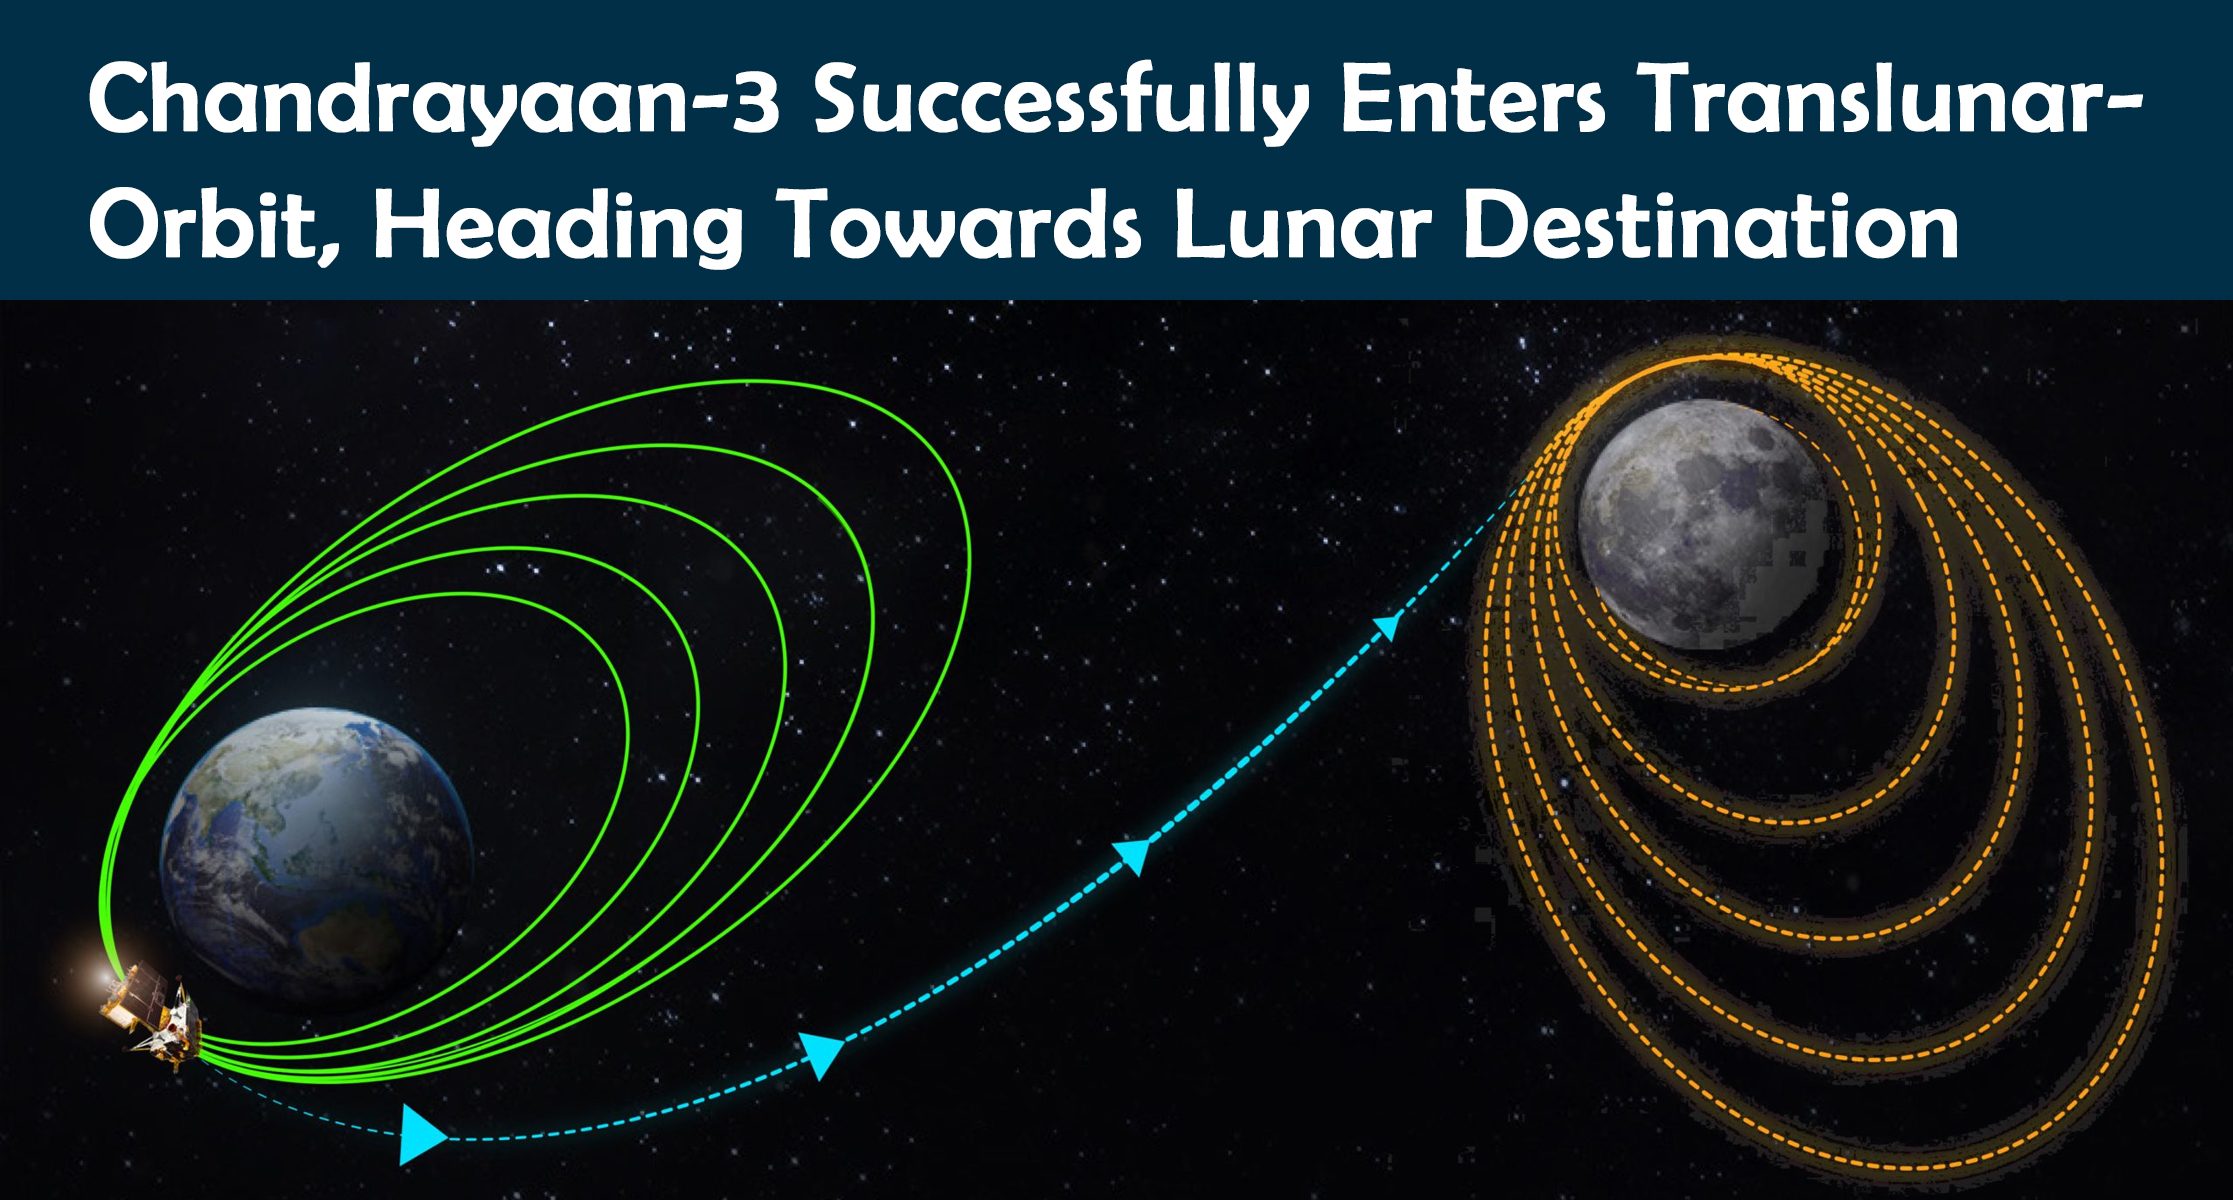 Chandrayaan-3 Successfully Enters Translunar Orbit, Heading Towards Lunar Destination